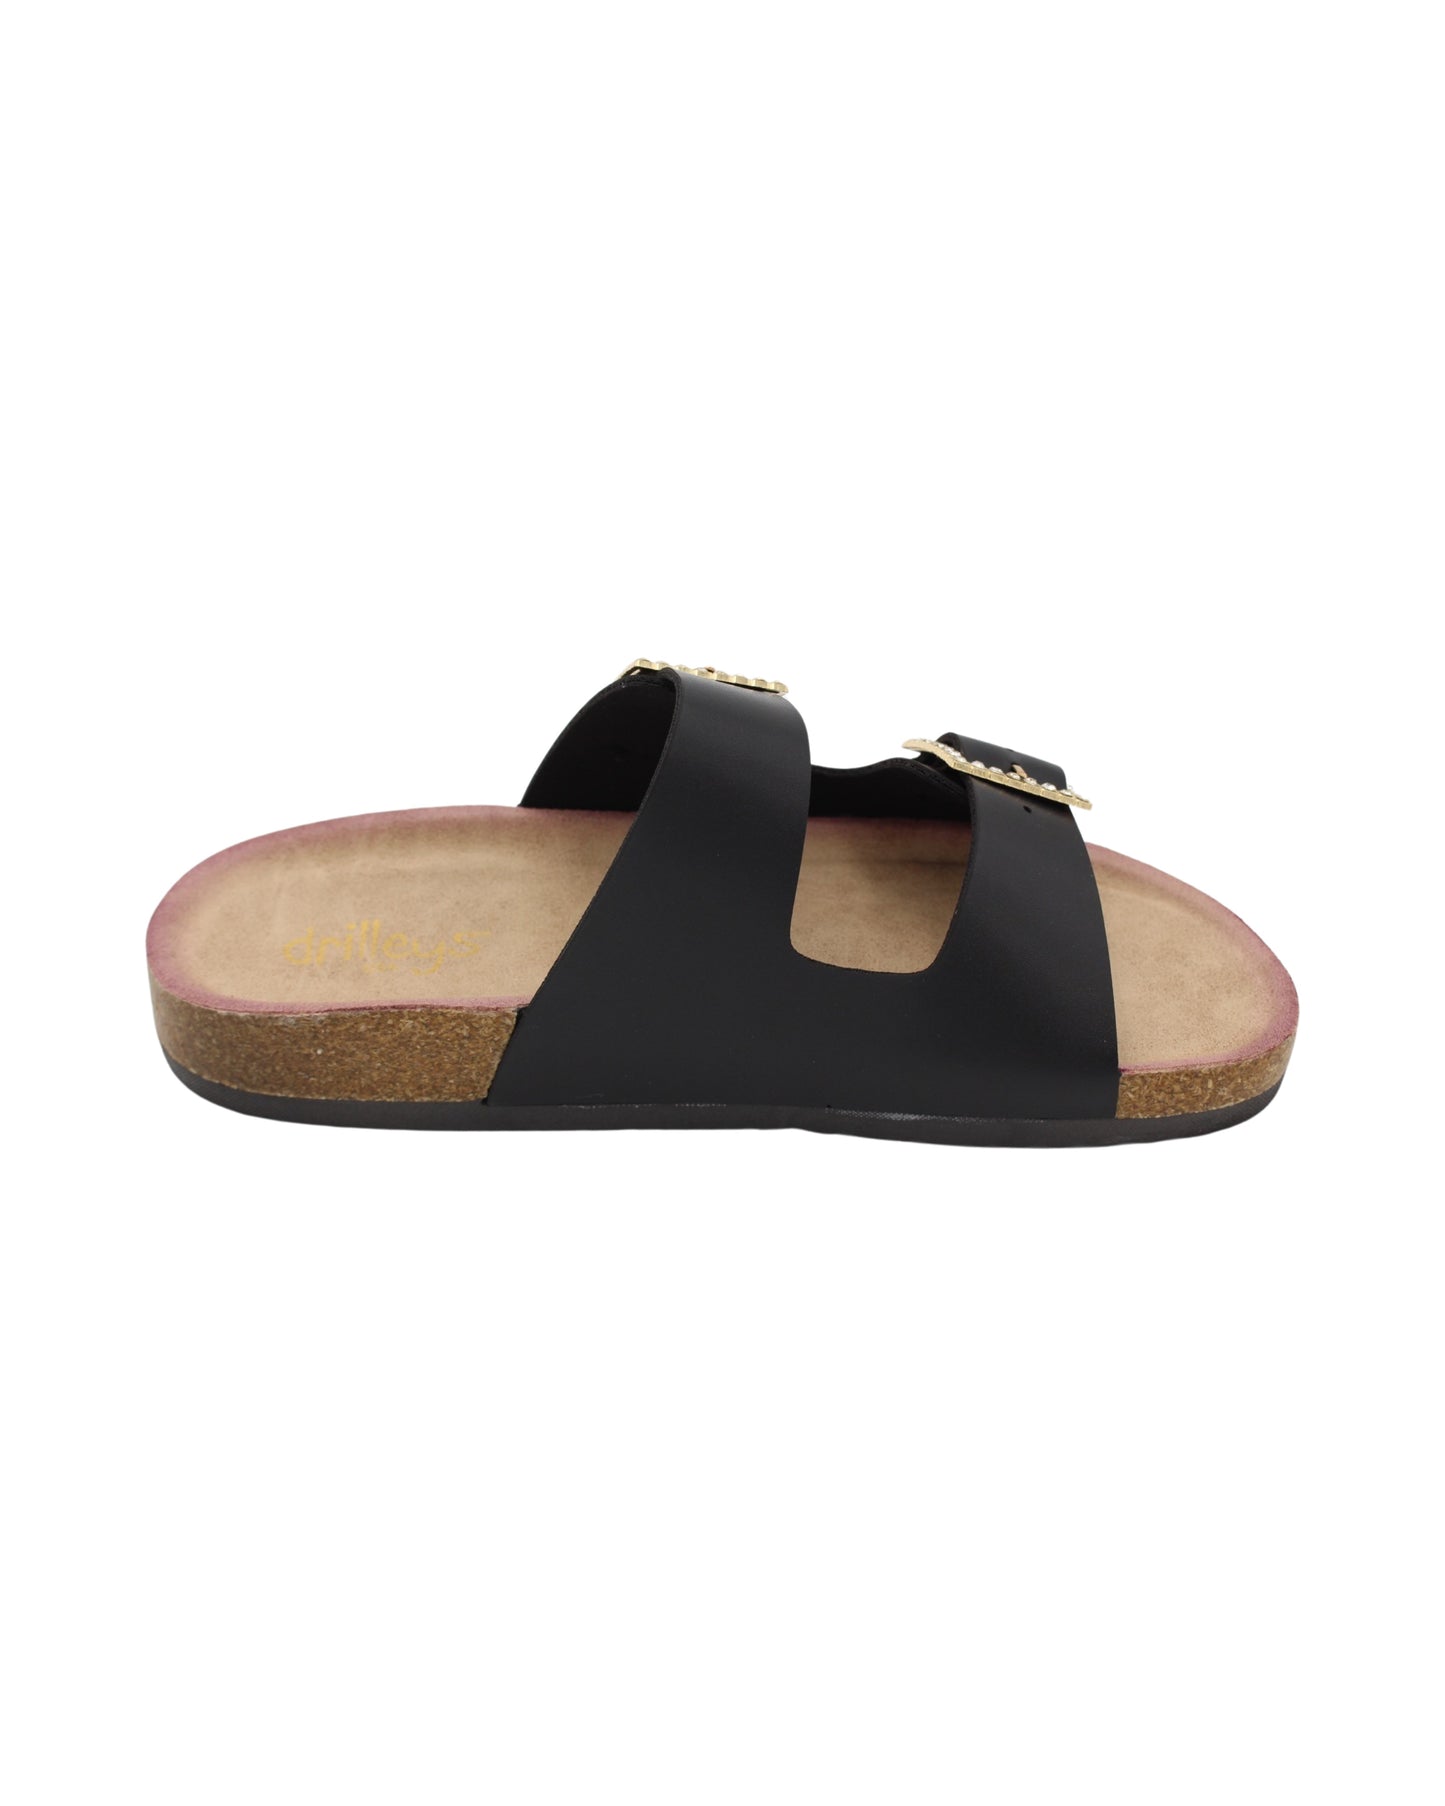 Drilleys - Ladies Shoes Sandals Black (2398)